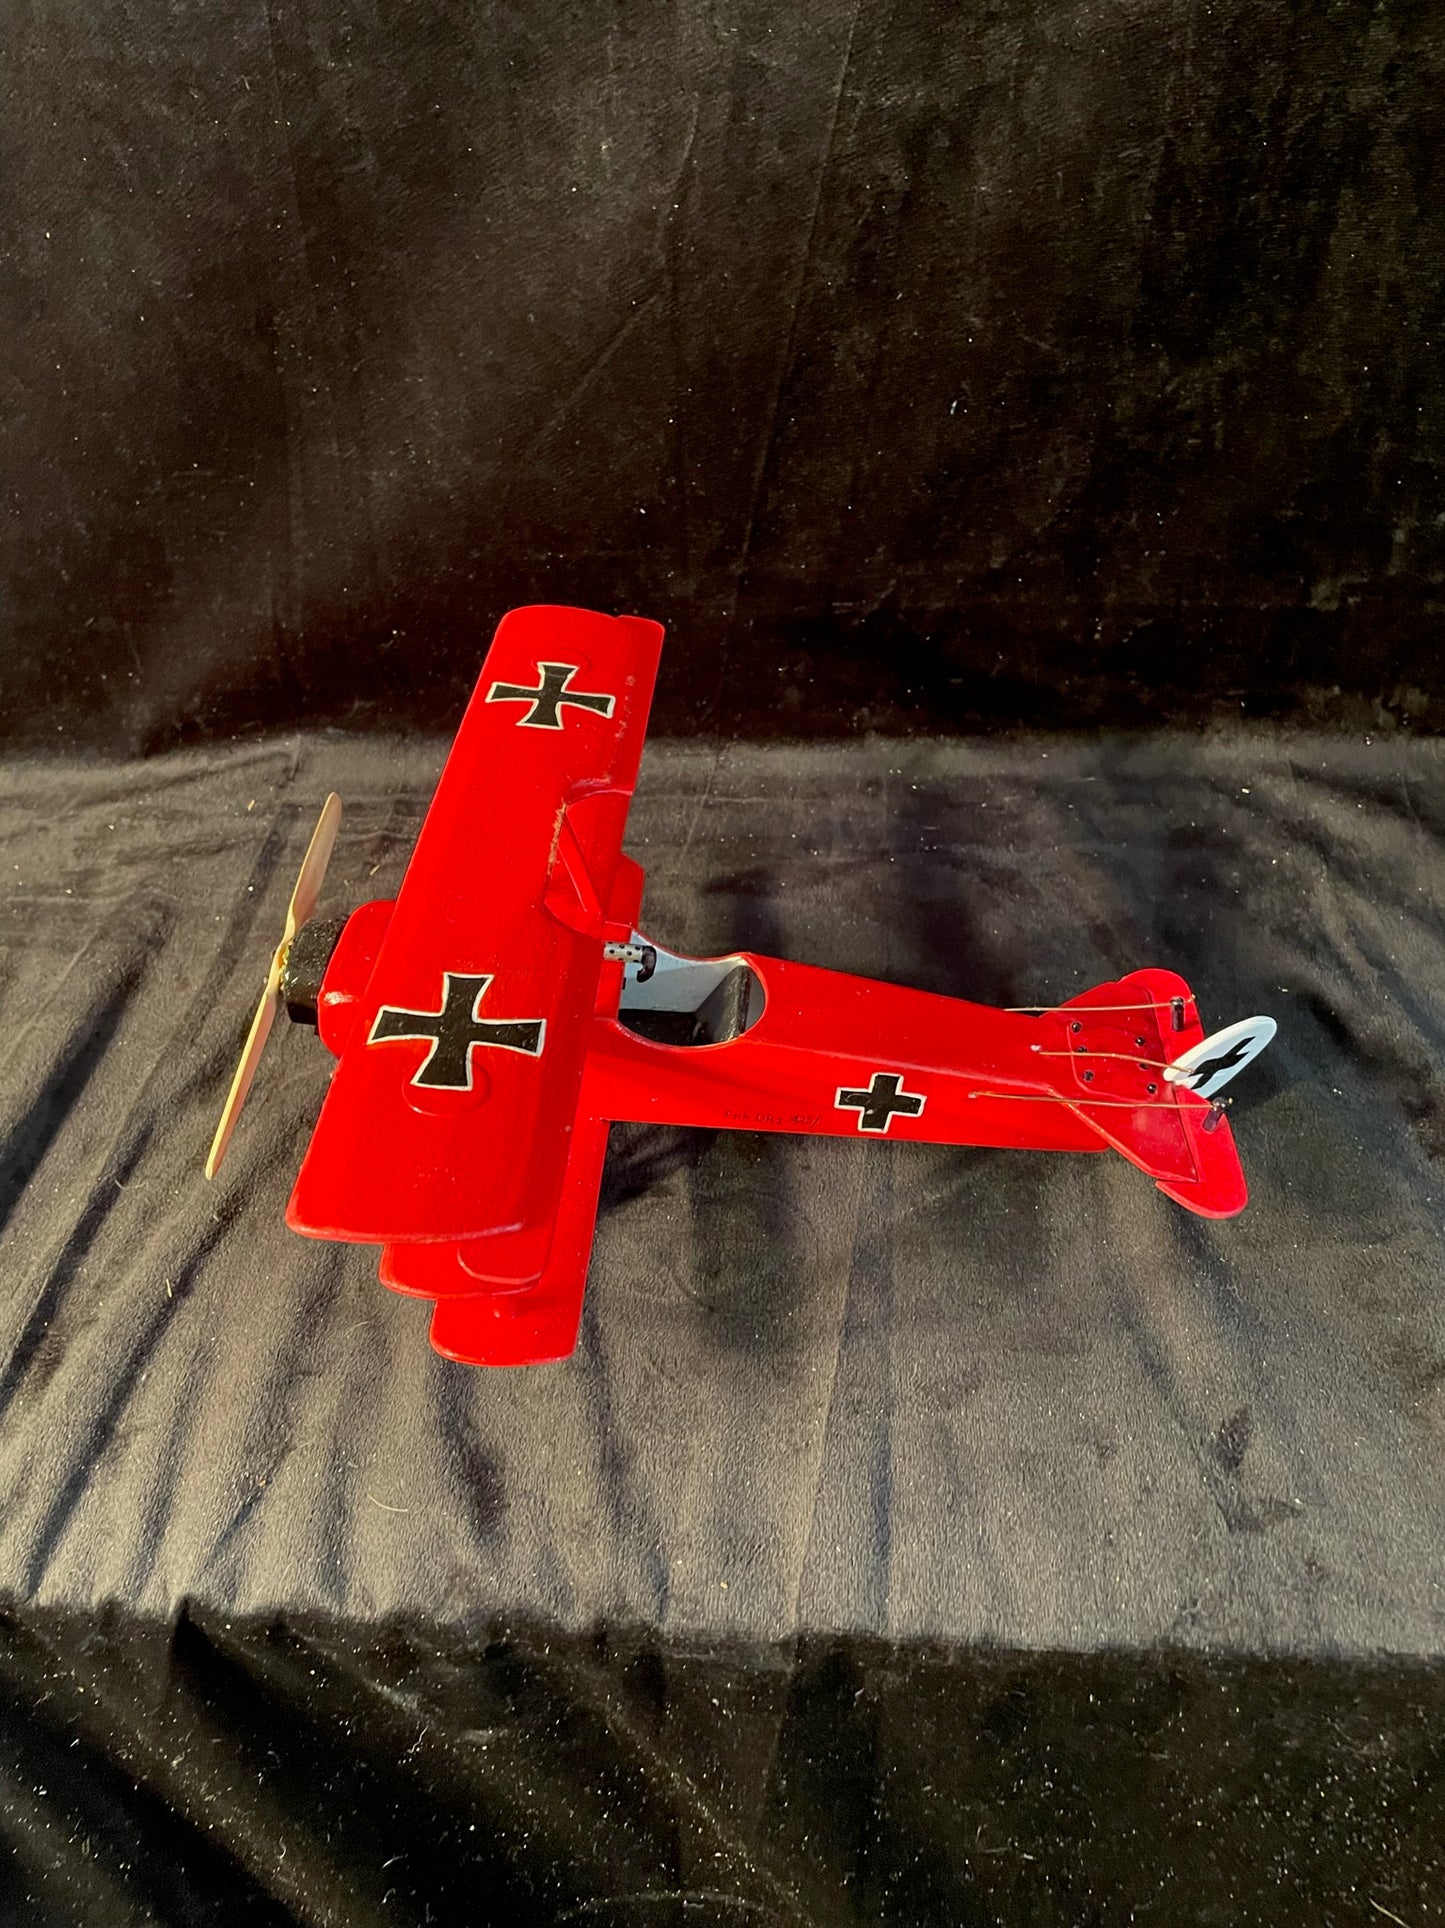 Red Model Plane